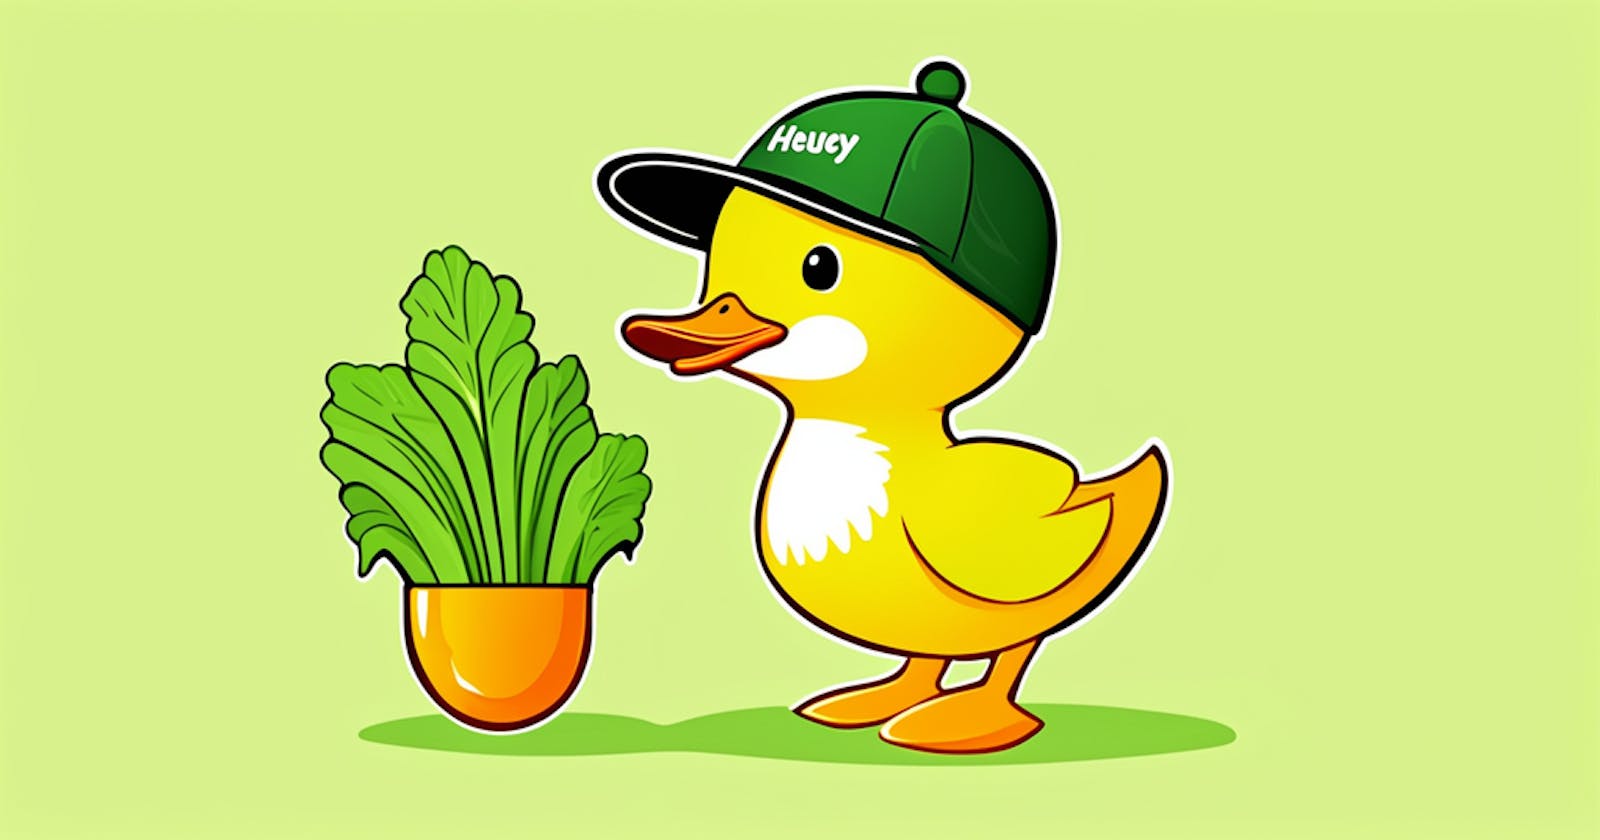 Celery Alternative for Django - Huey